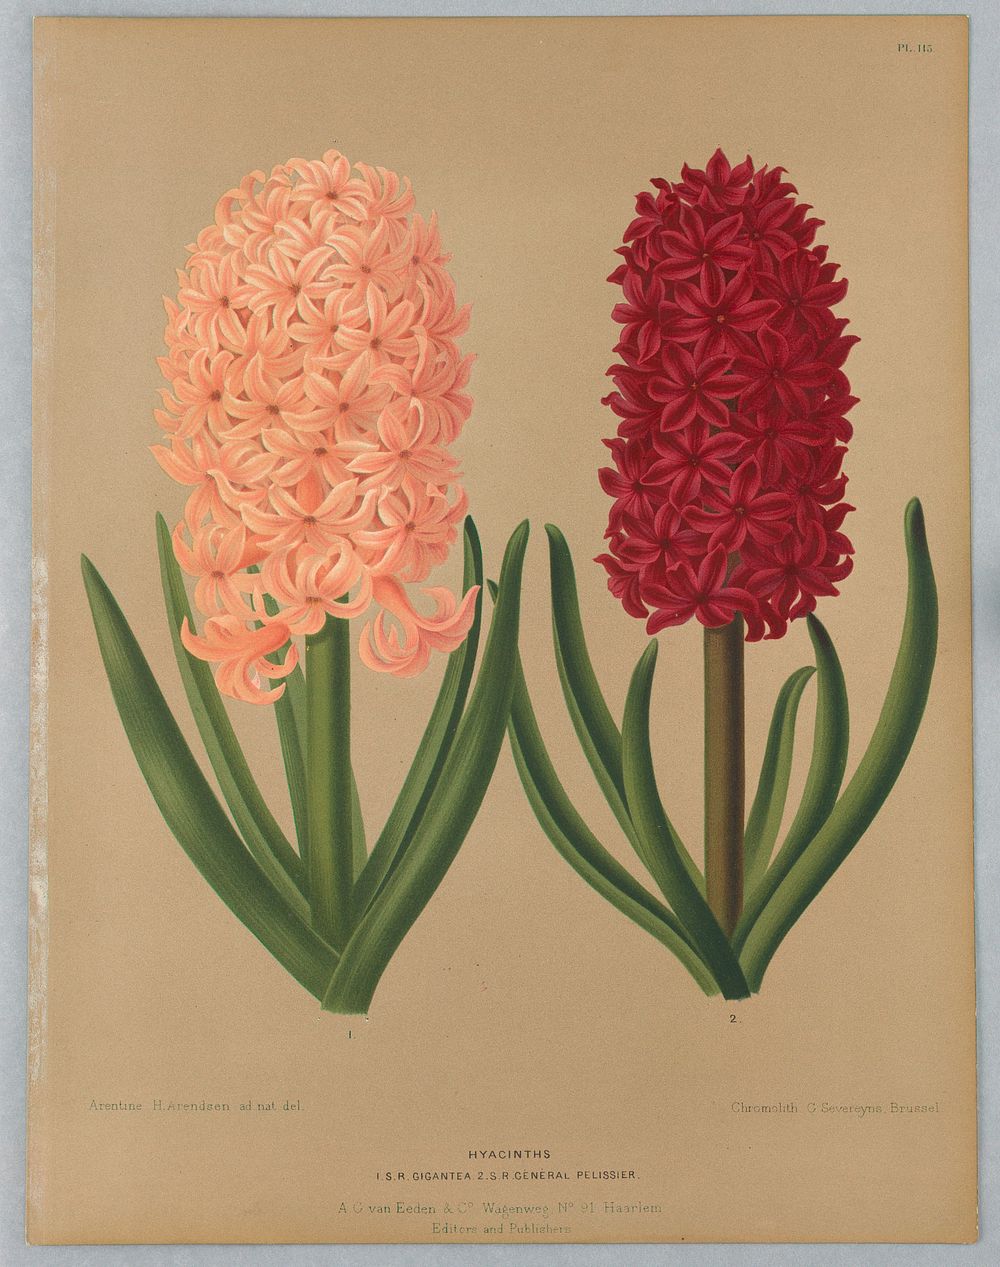 Hyacinths: I.S.R. Gigantea and Général Pelissier, Plate 115 from A. C. Van Eeden's "Flora of Haarlem"